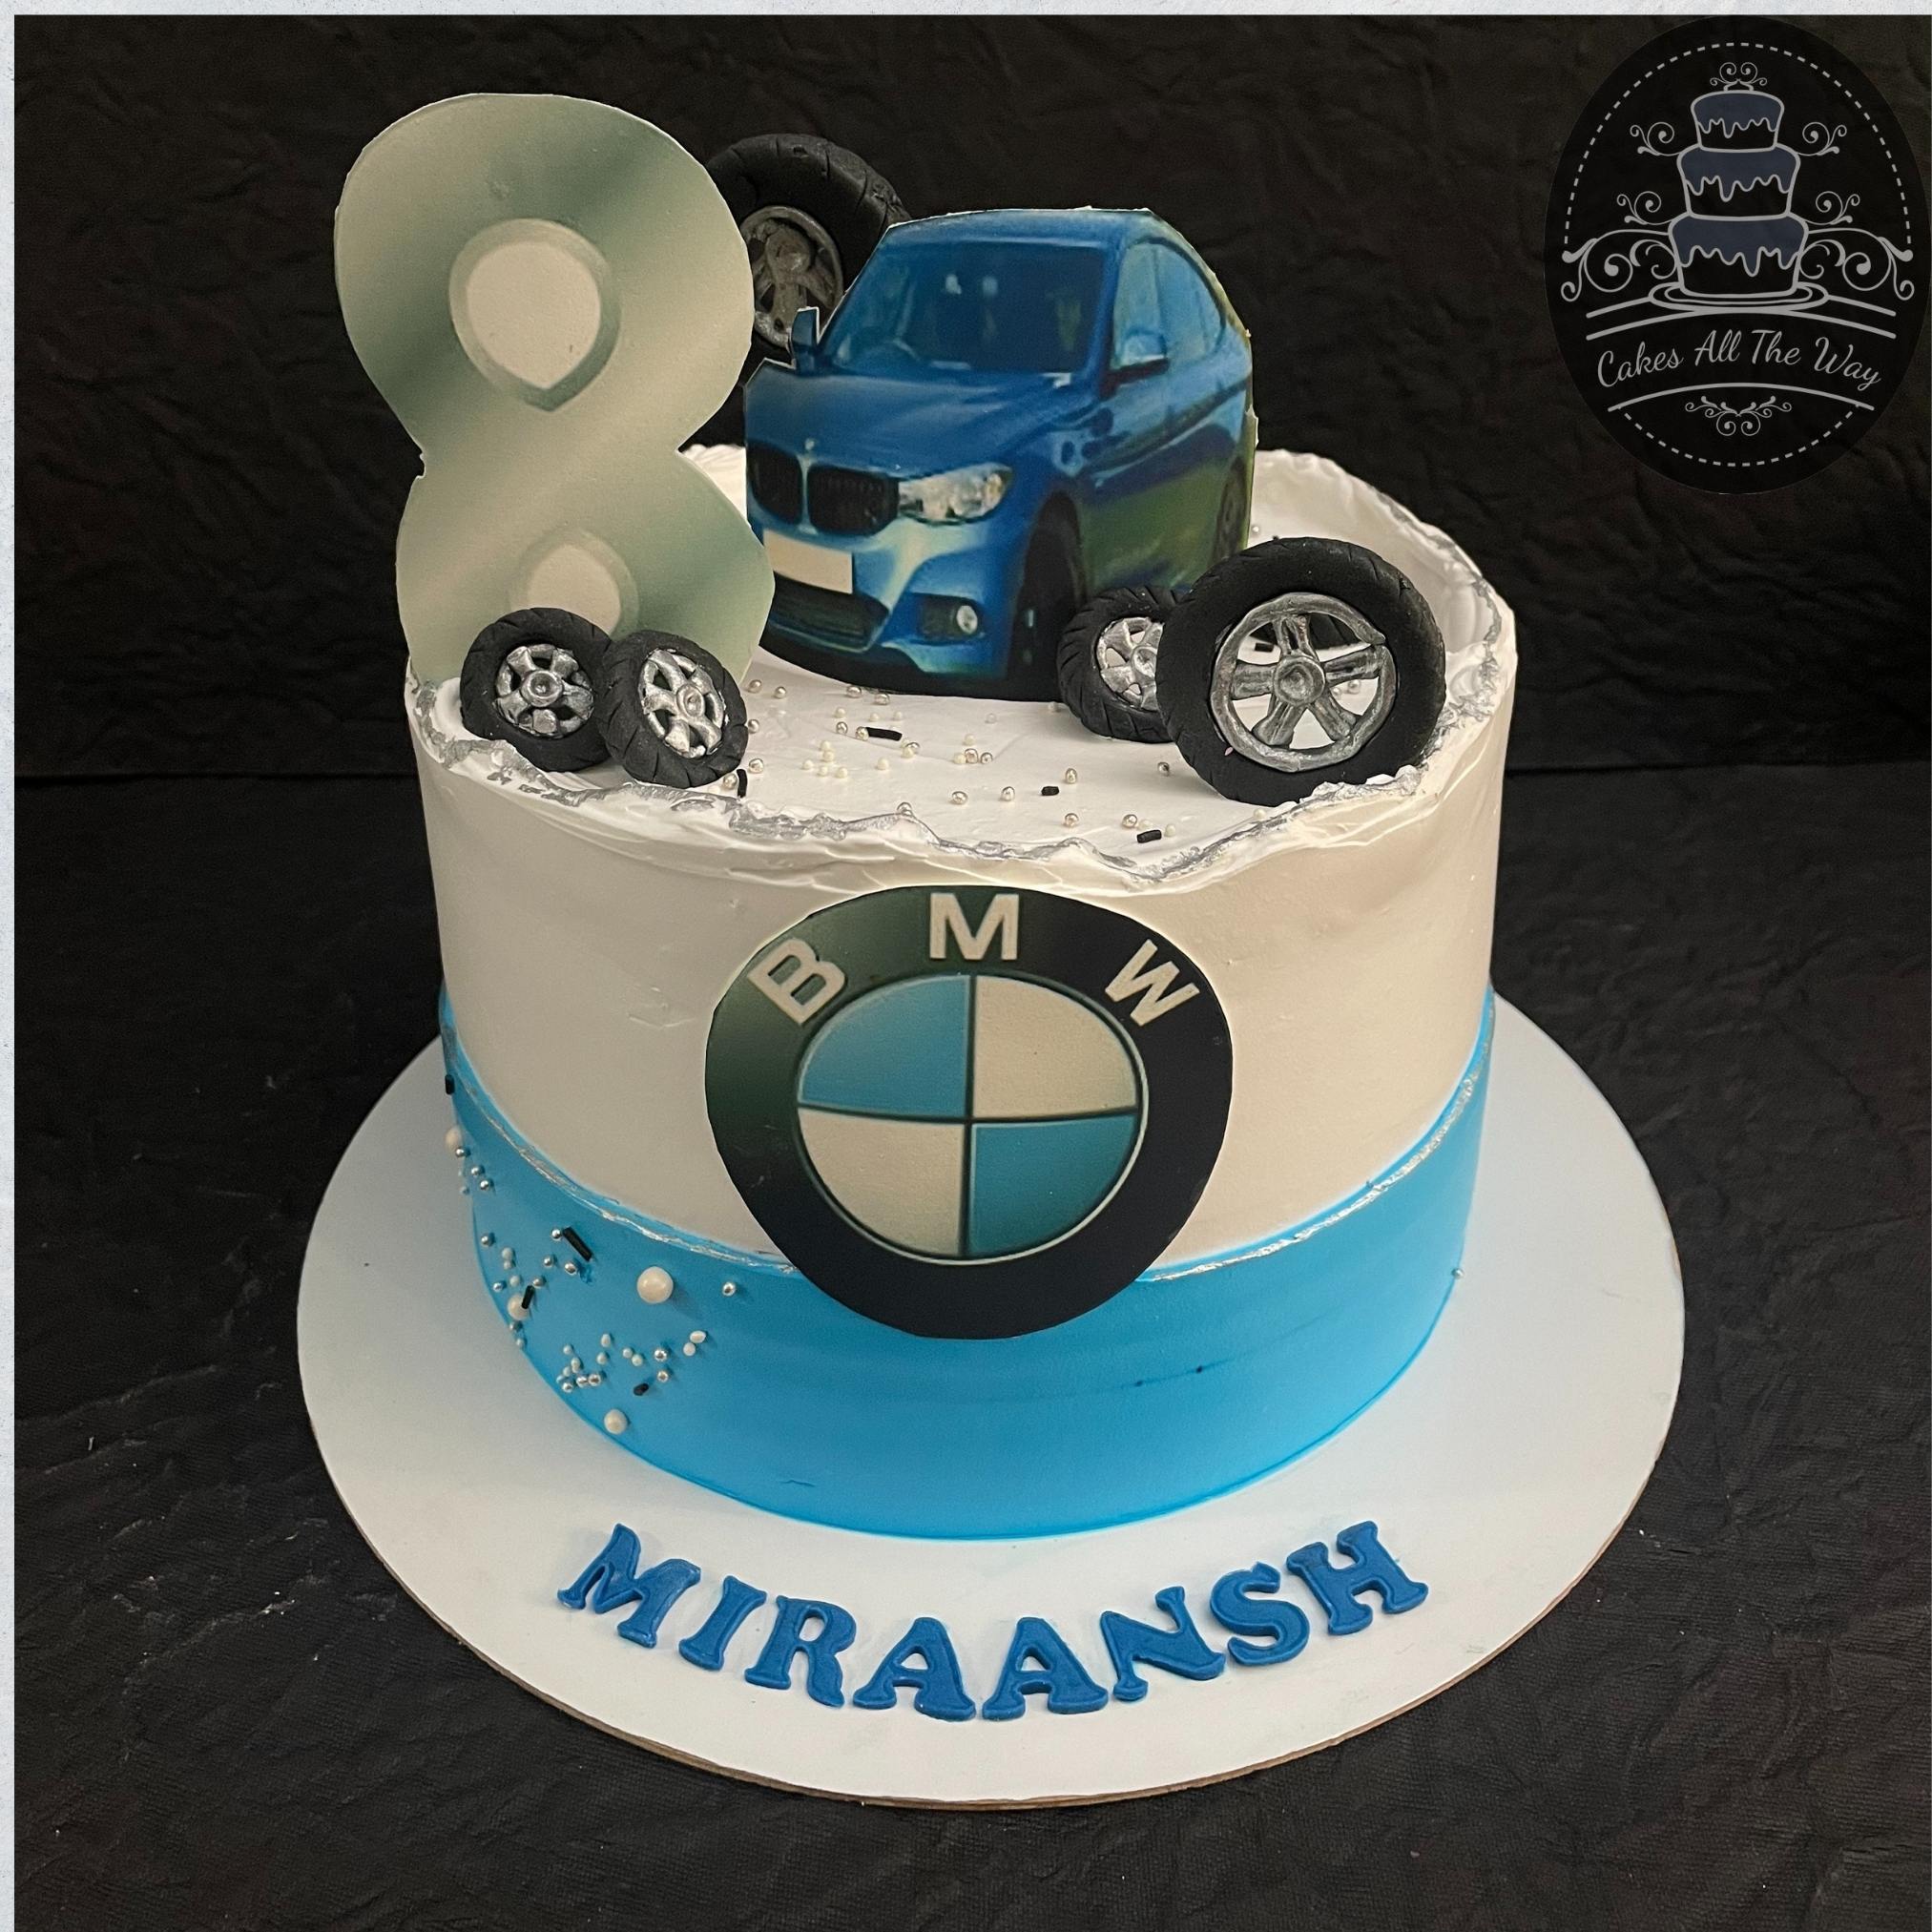 Rea's Cakes & Cafe - BMW theme cake | Facebook